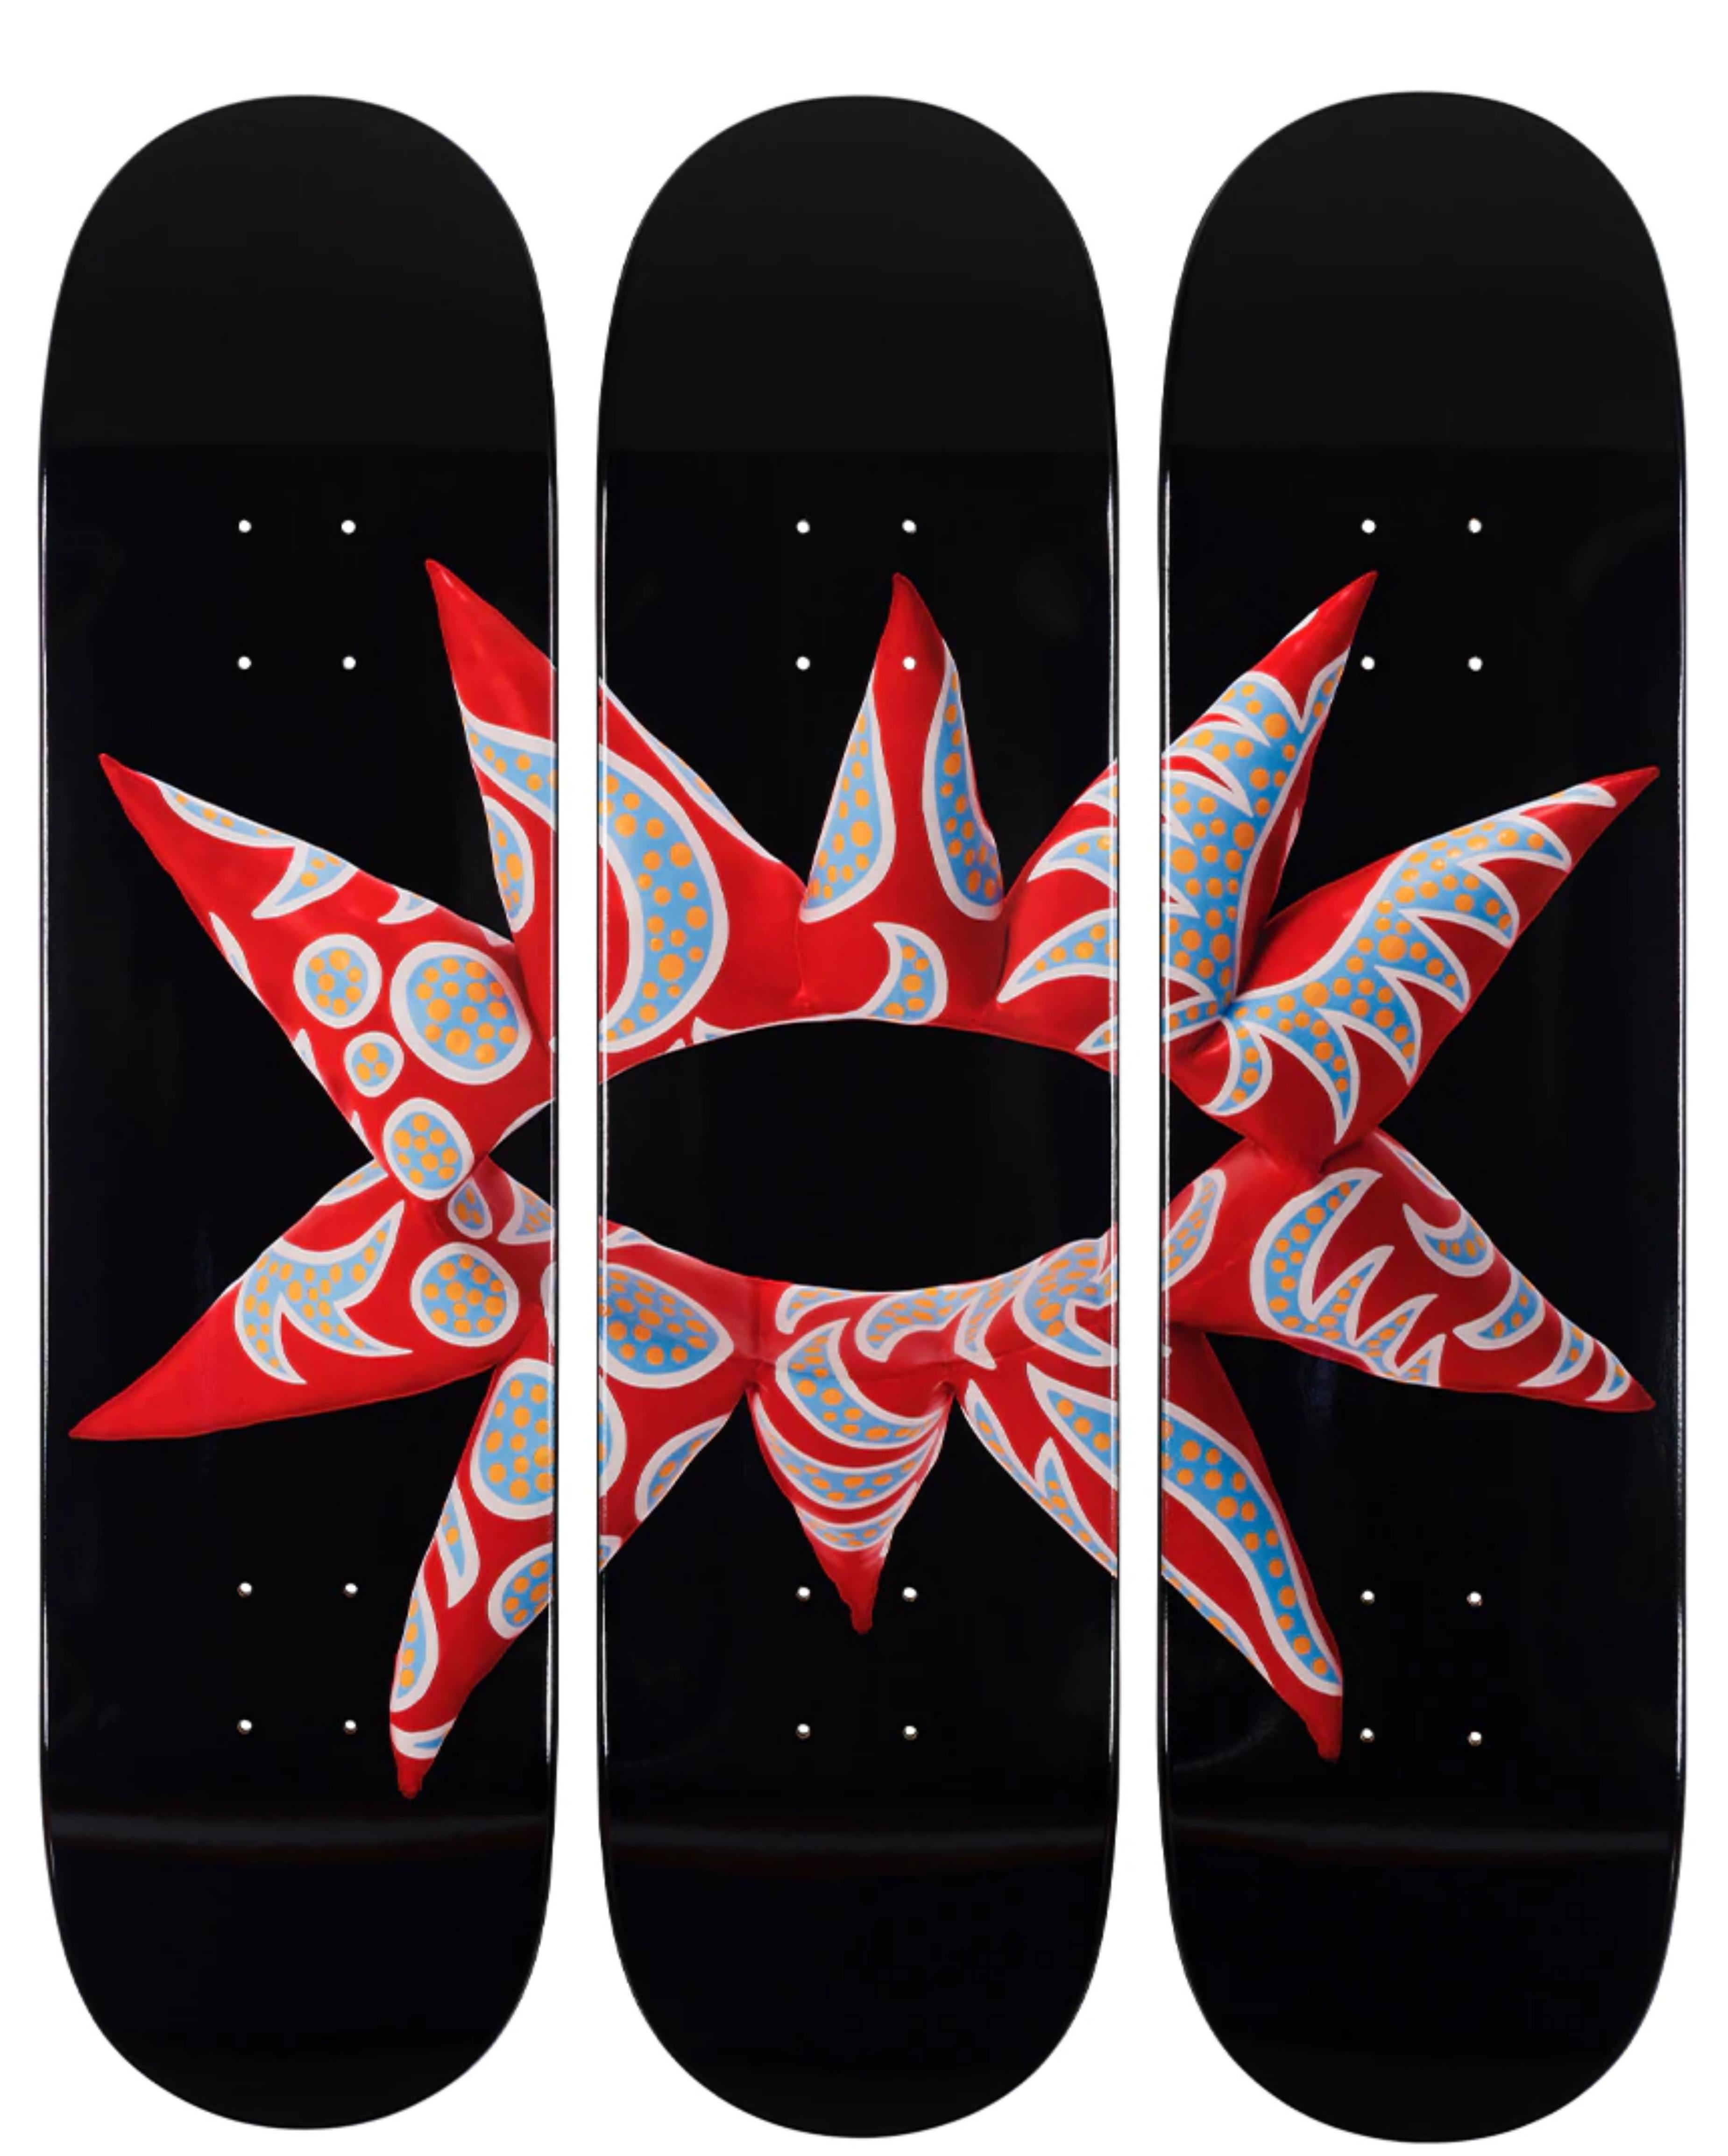 With all My Flowering Heart Skateboard Triptych, 3 Limited Edition Skate Decks  - Print by Yayoi Kusama